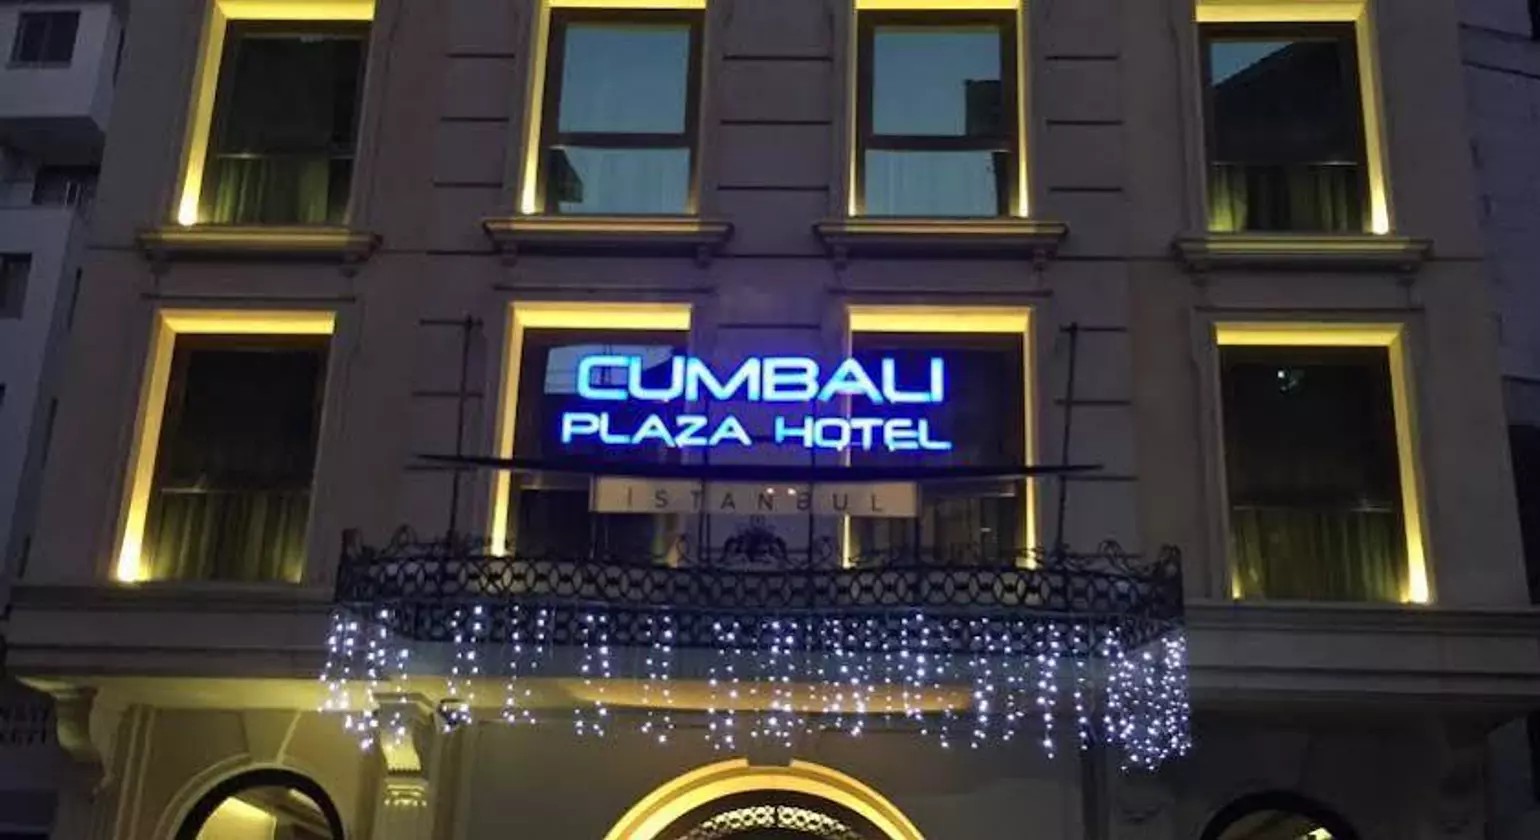 Cumbalı Plaza Hotel